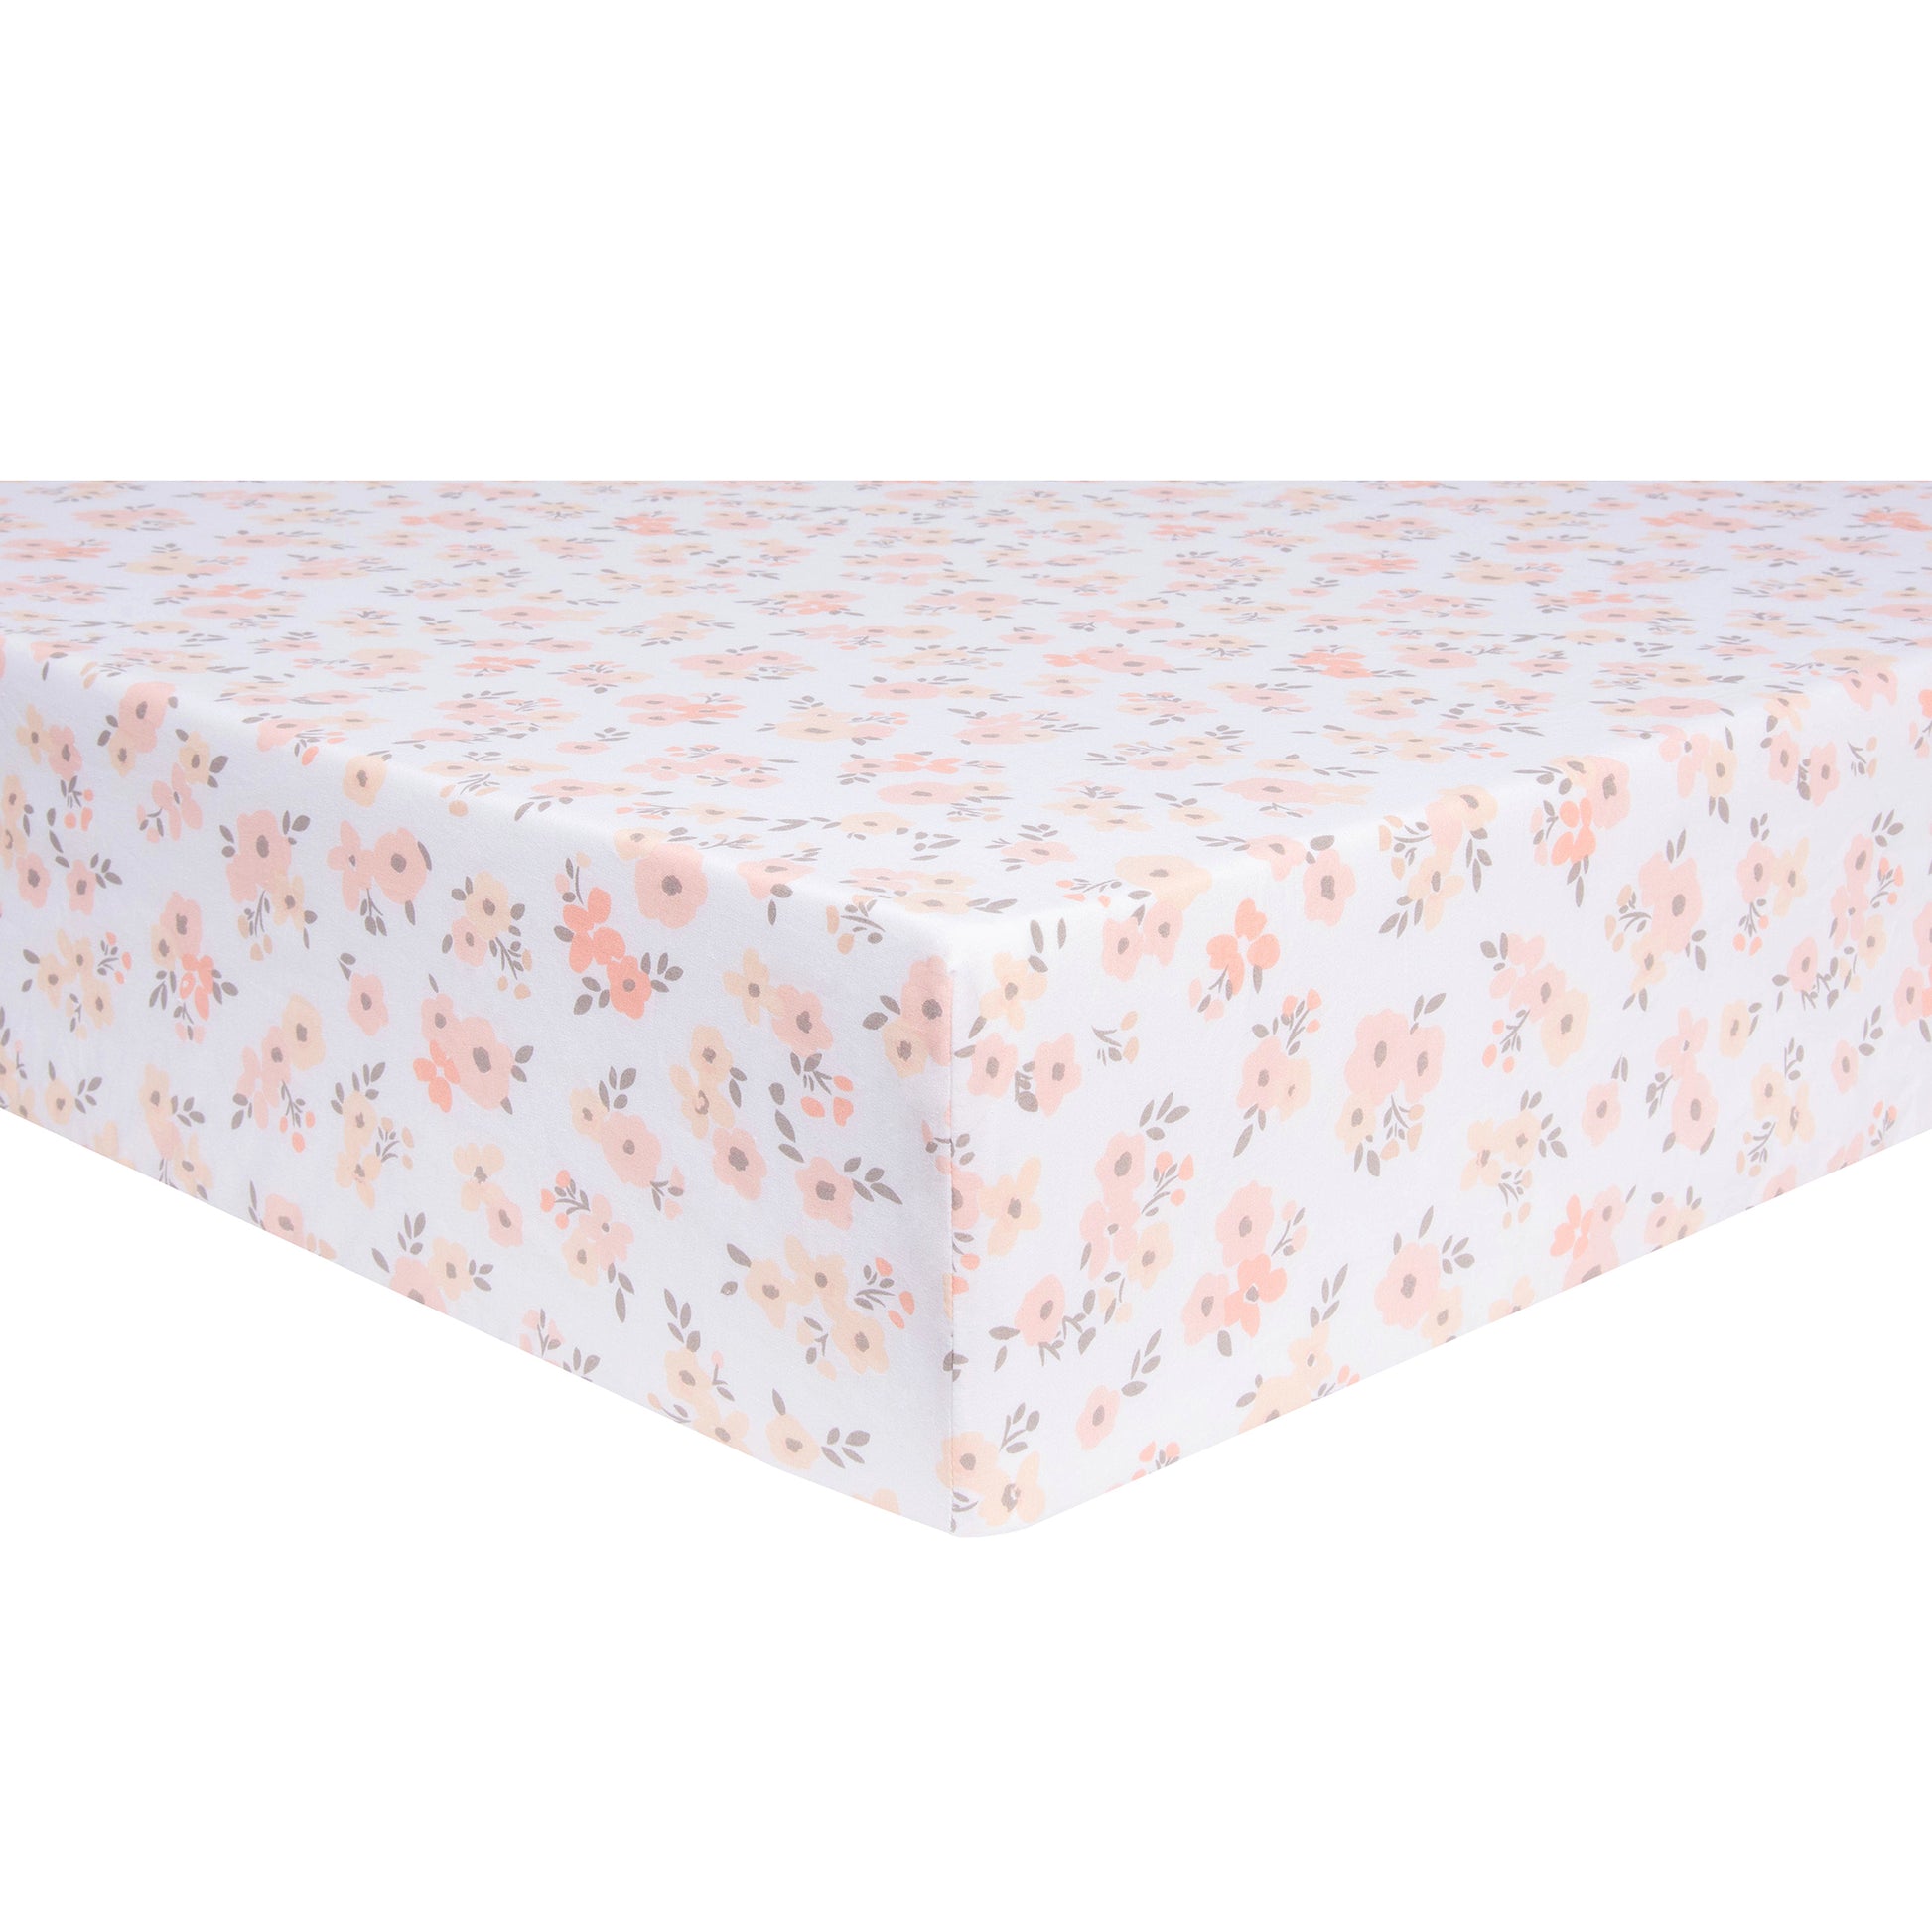 Blush Floral 3 Piece Crib Bedding Set - corner view